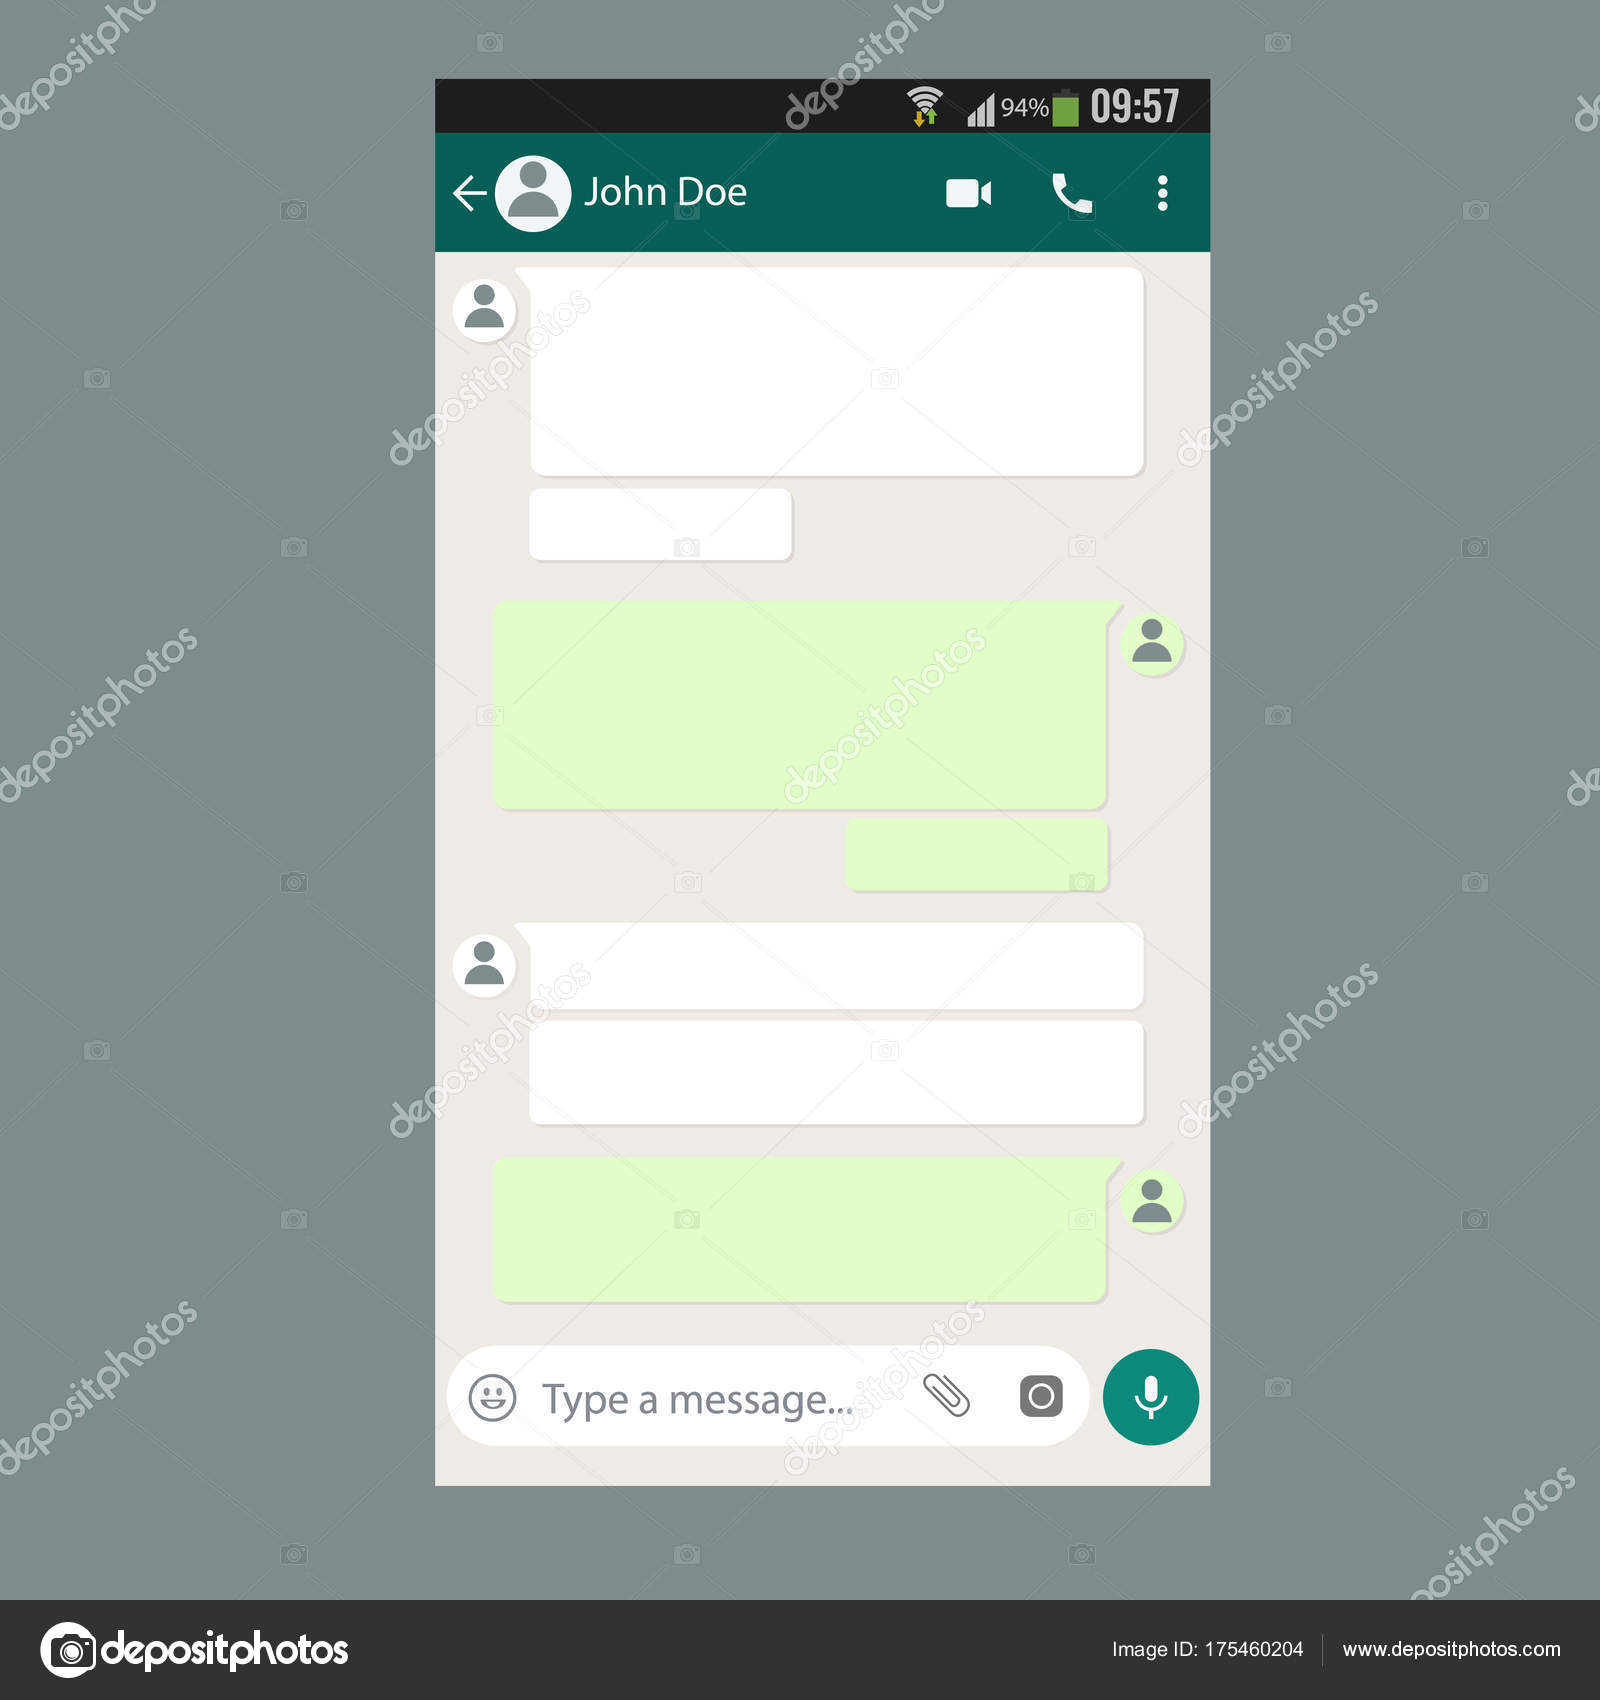 Download Whatsapp Chat Mockup - Free Download Mockup